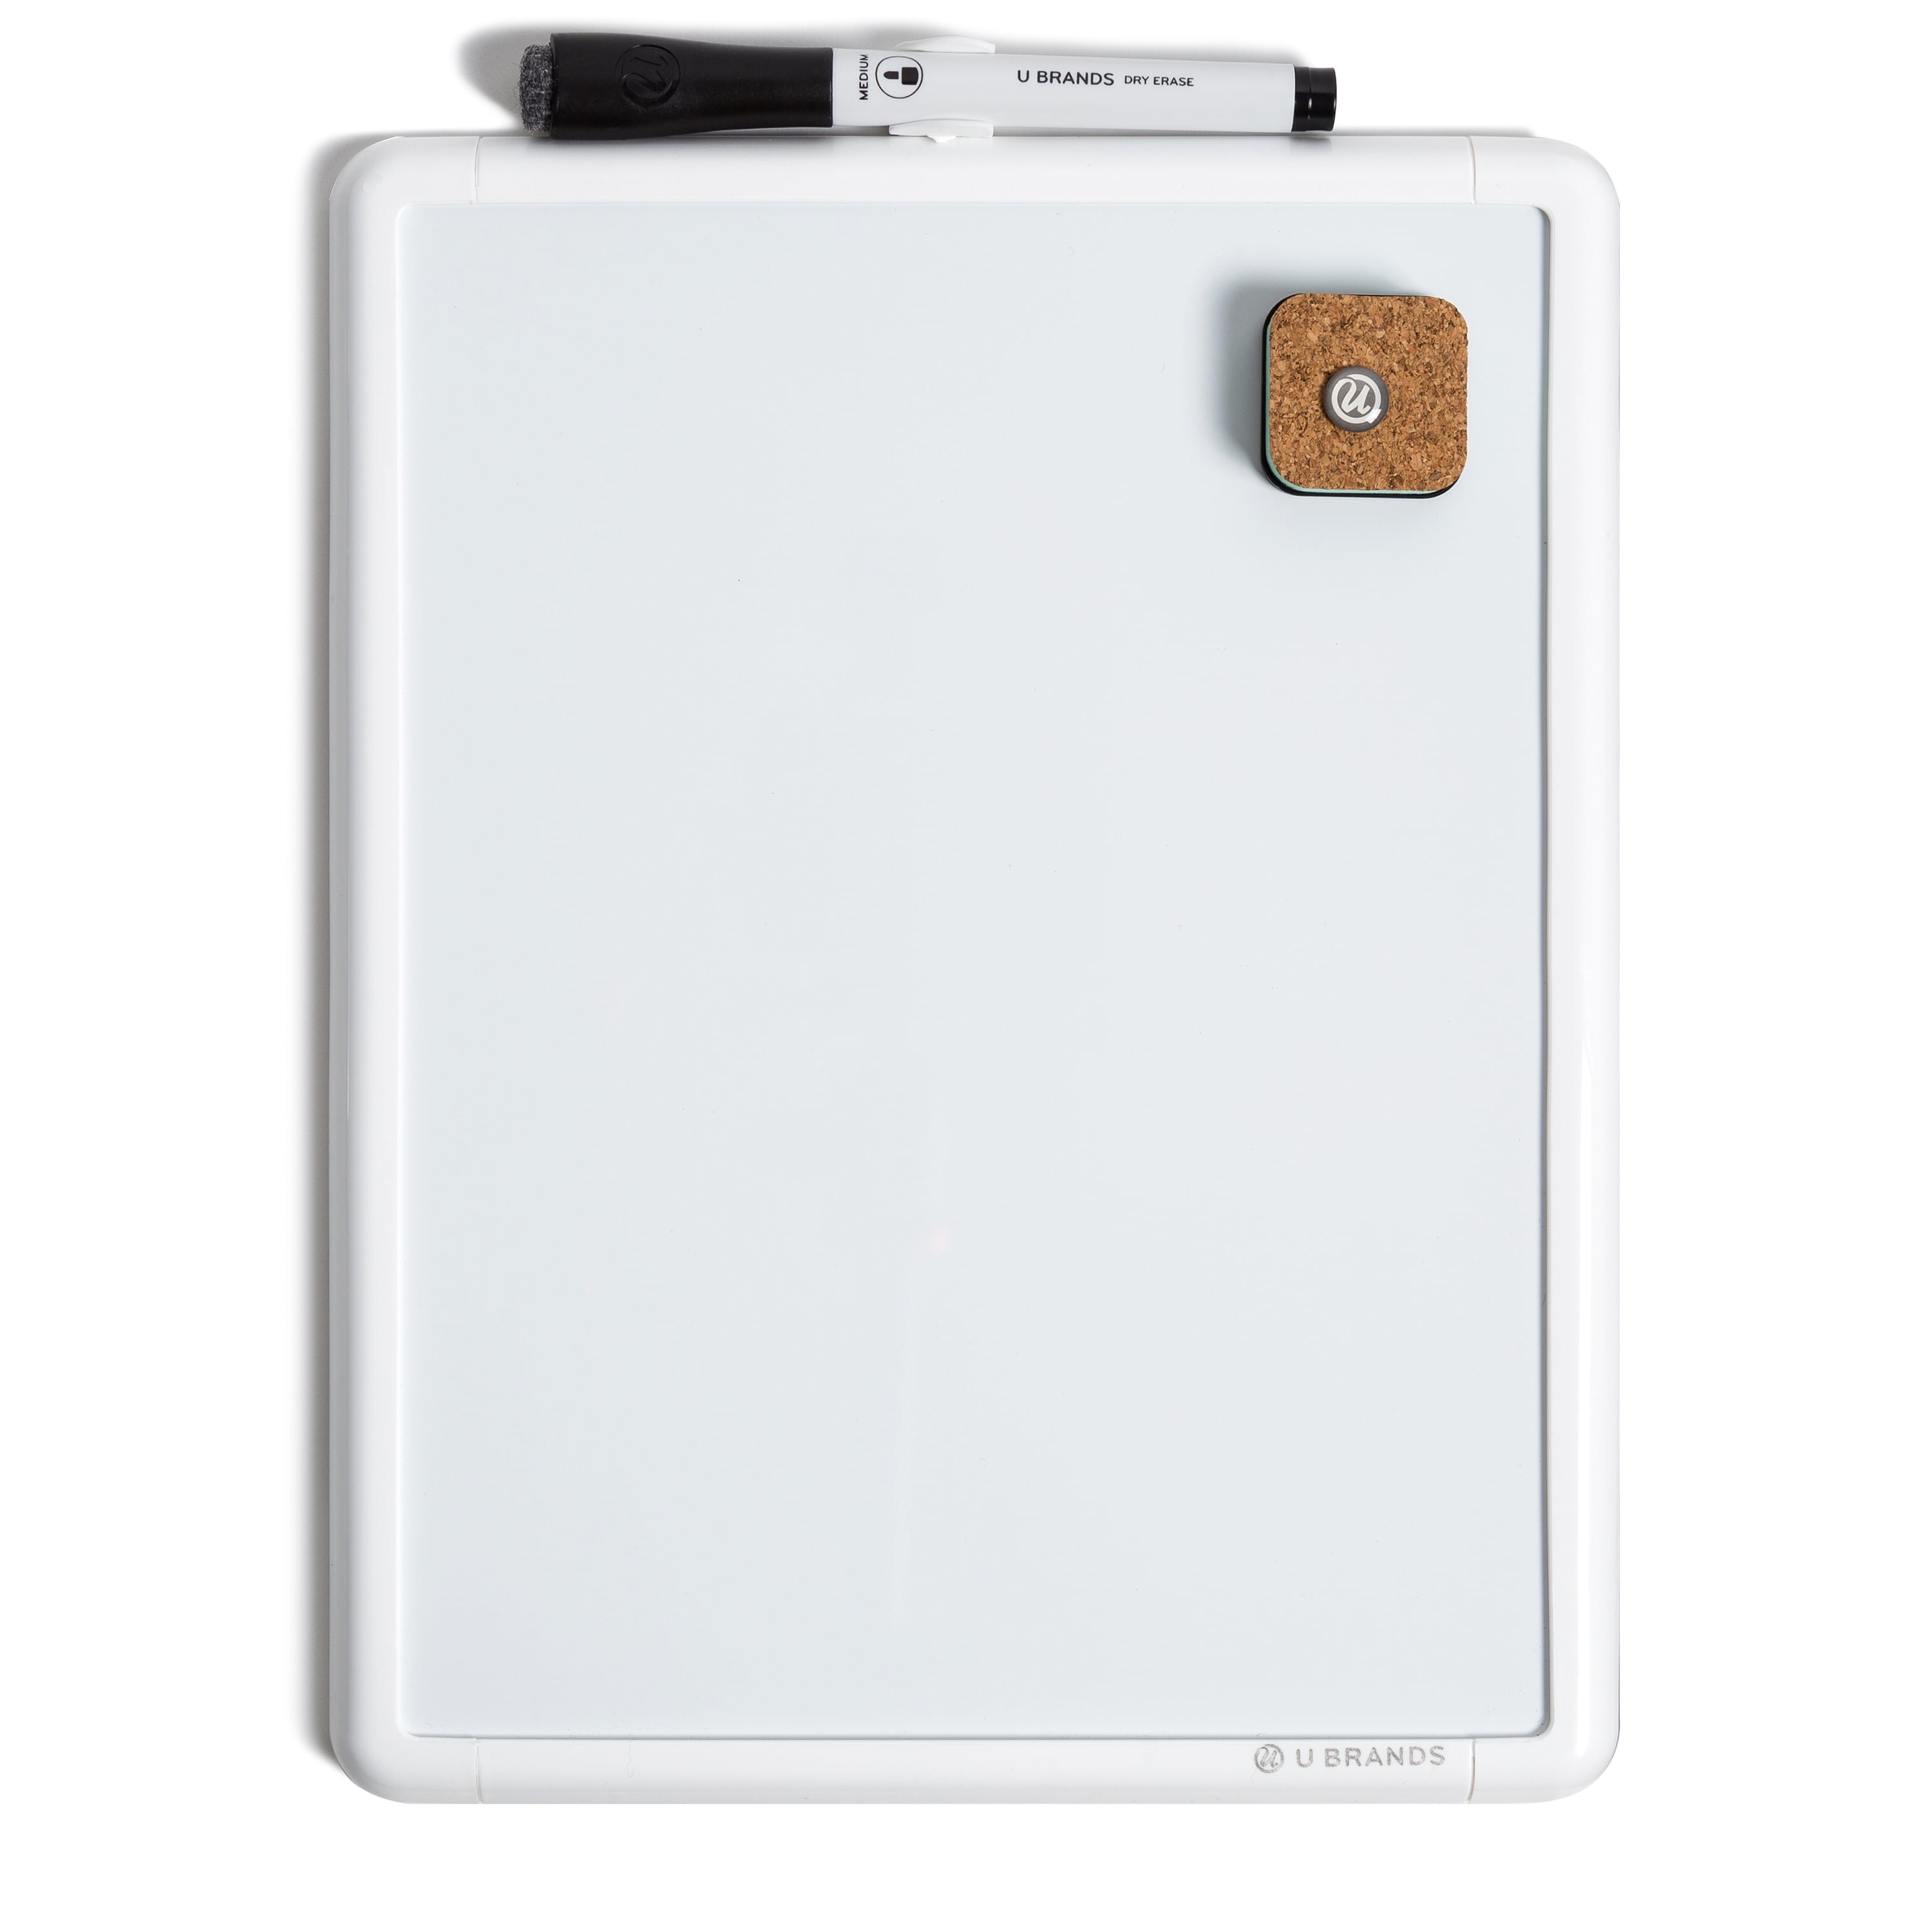 U BRANDS 8.5" x 11" Contempo Magnetic Dry Erase Whiteboard, White Frame, 5162U